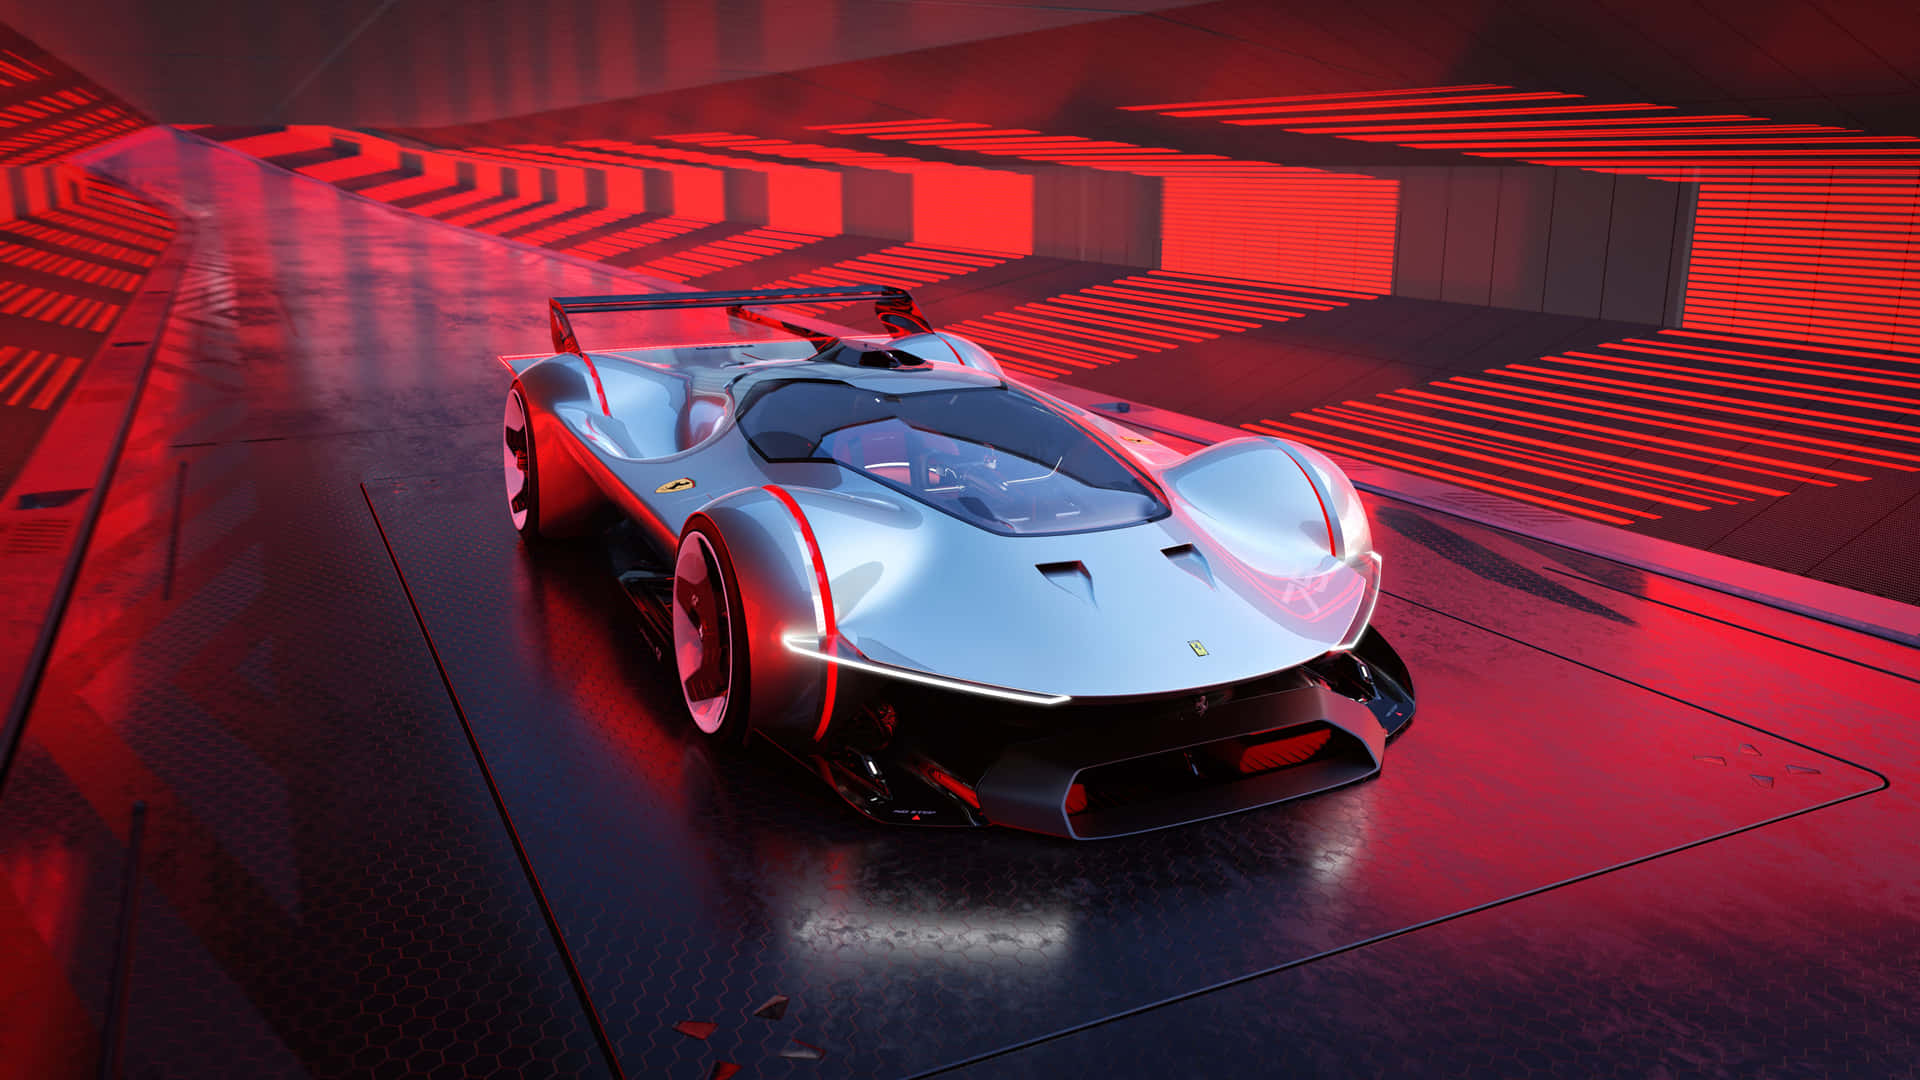 Futuristic Supercar Red Lighting Wallpaper